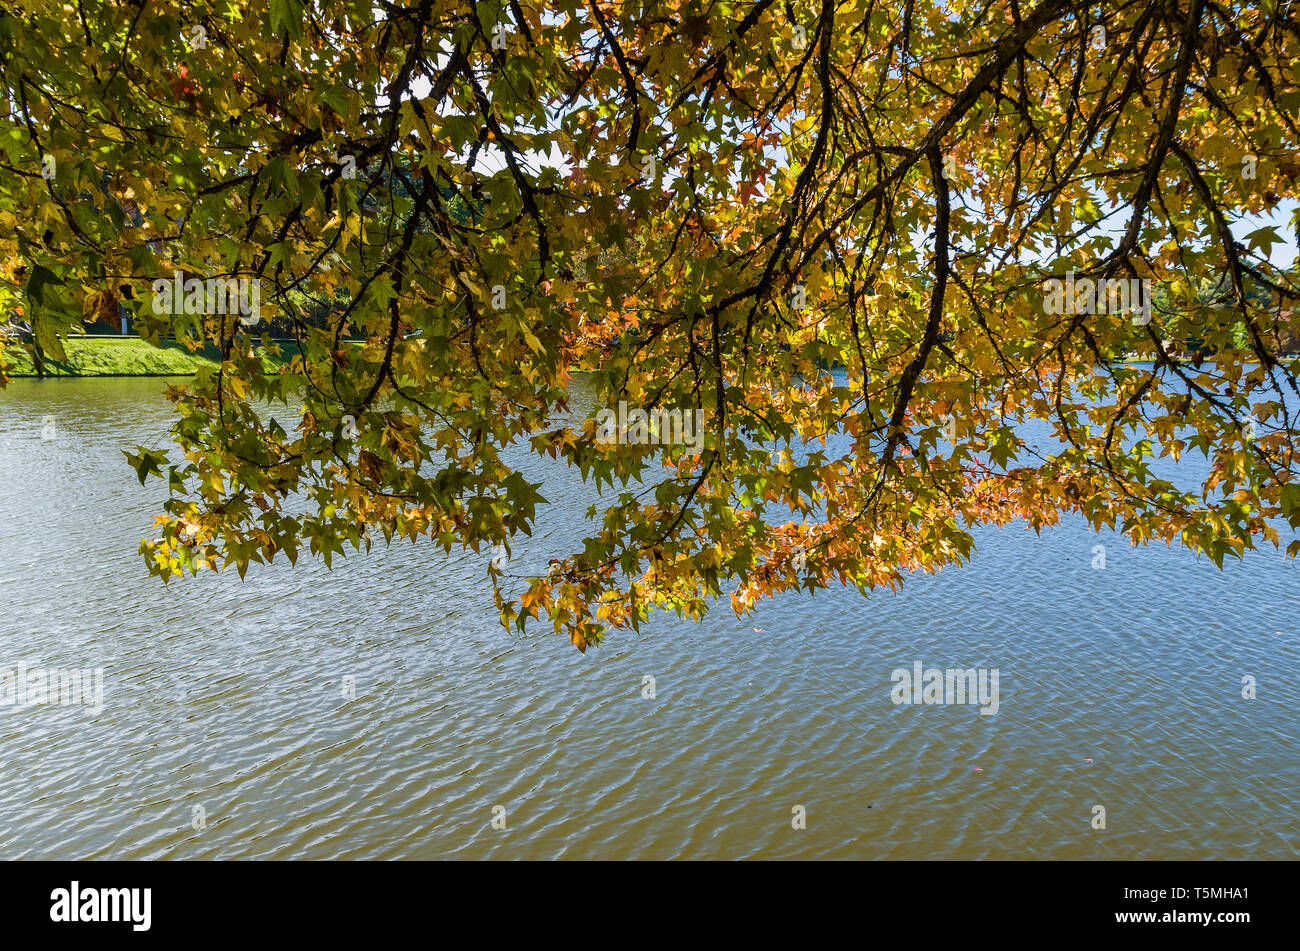 Great concept of autumn, beautiful trees of the genus Platanus with reddish leaves signaling the fall, San Bernardo lake in San Francisco de Paula, Br Stock Photo